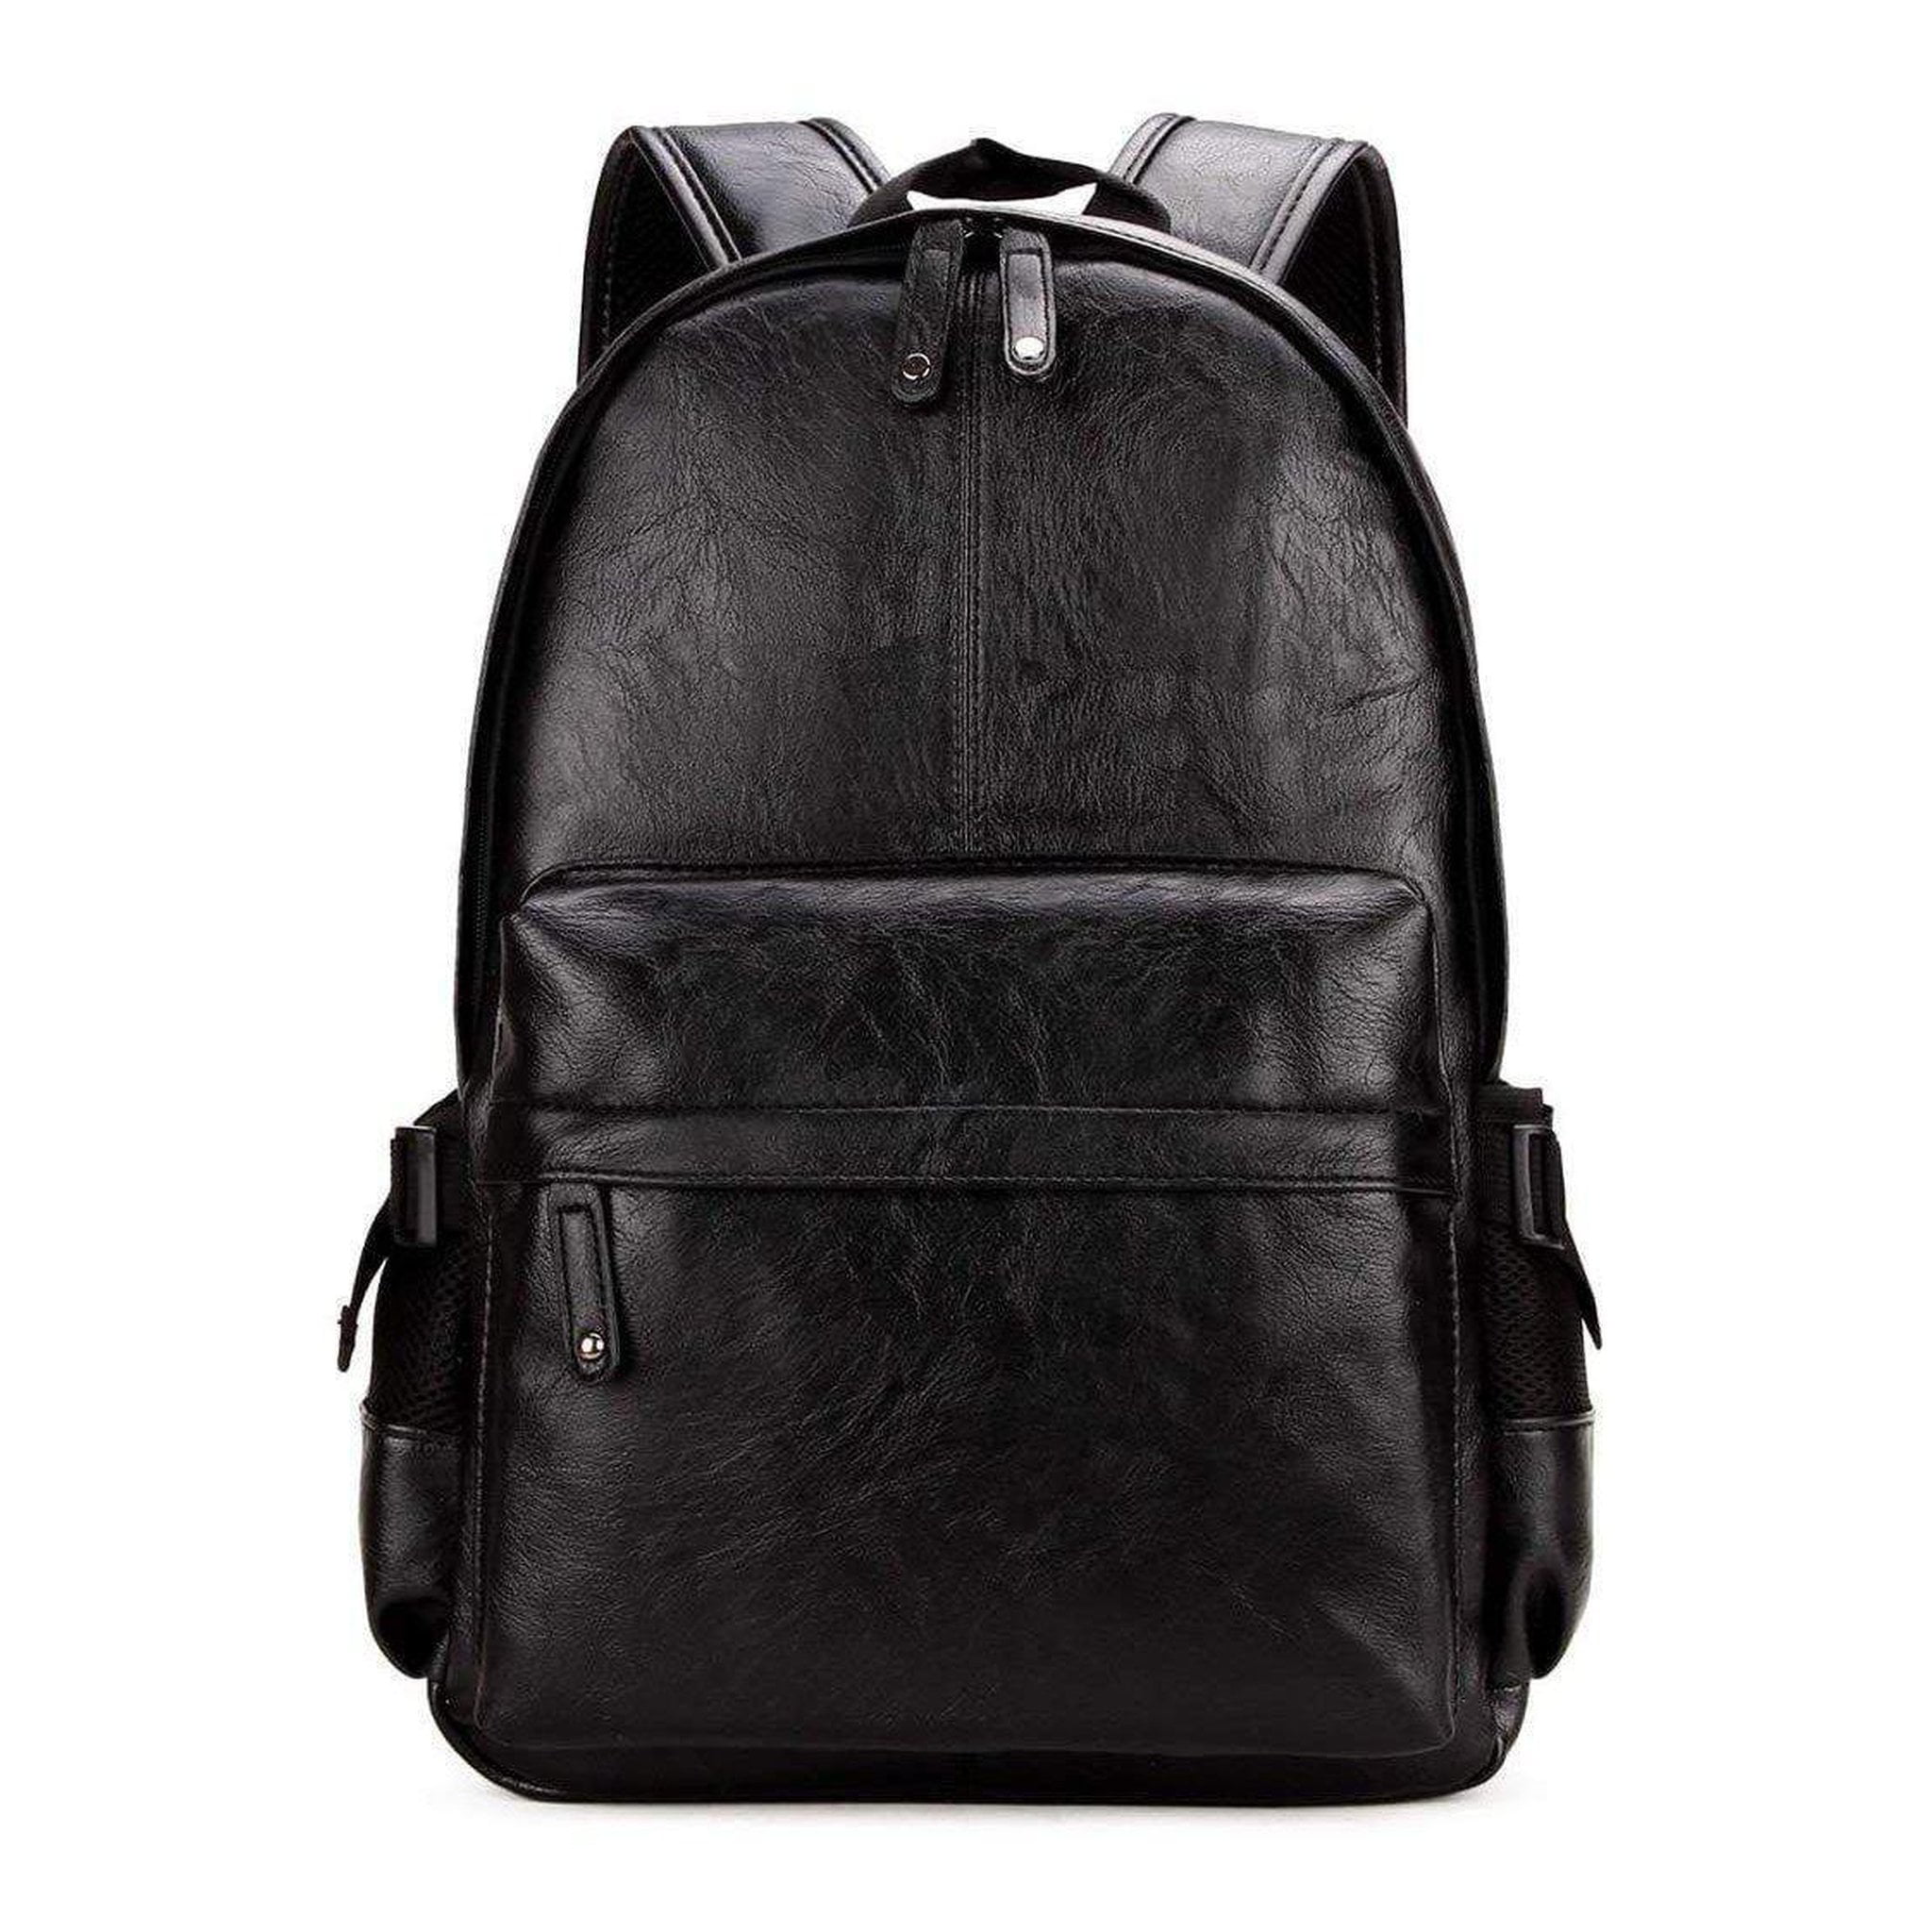 Mens Backpack Backpack Mens Laptop Backpack School Backpack Business Leisure Hiking Backpack Casual Leather Backpack Color : Black, Size : 431030cm